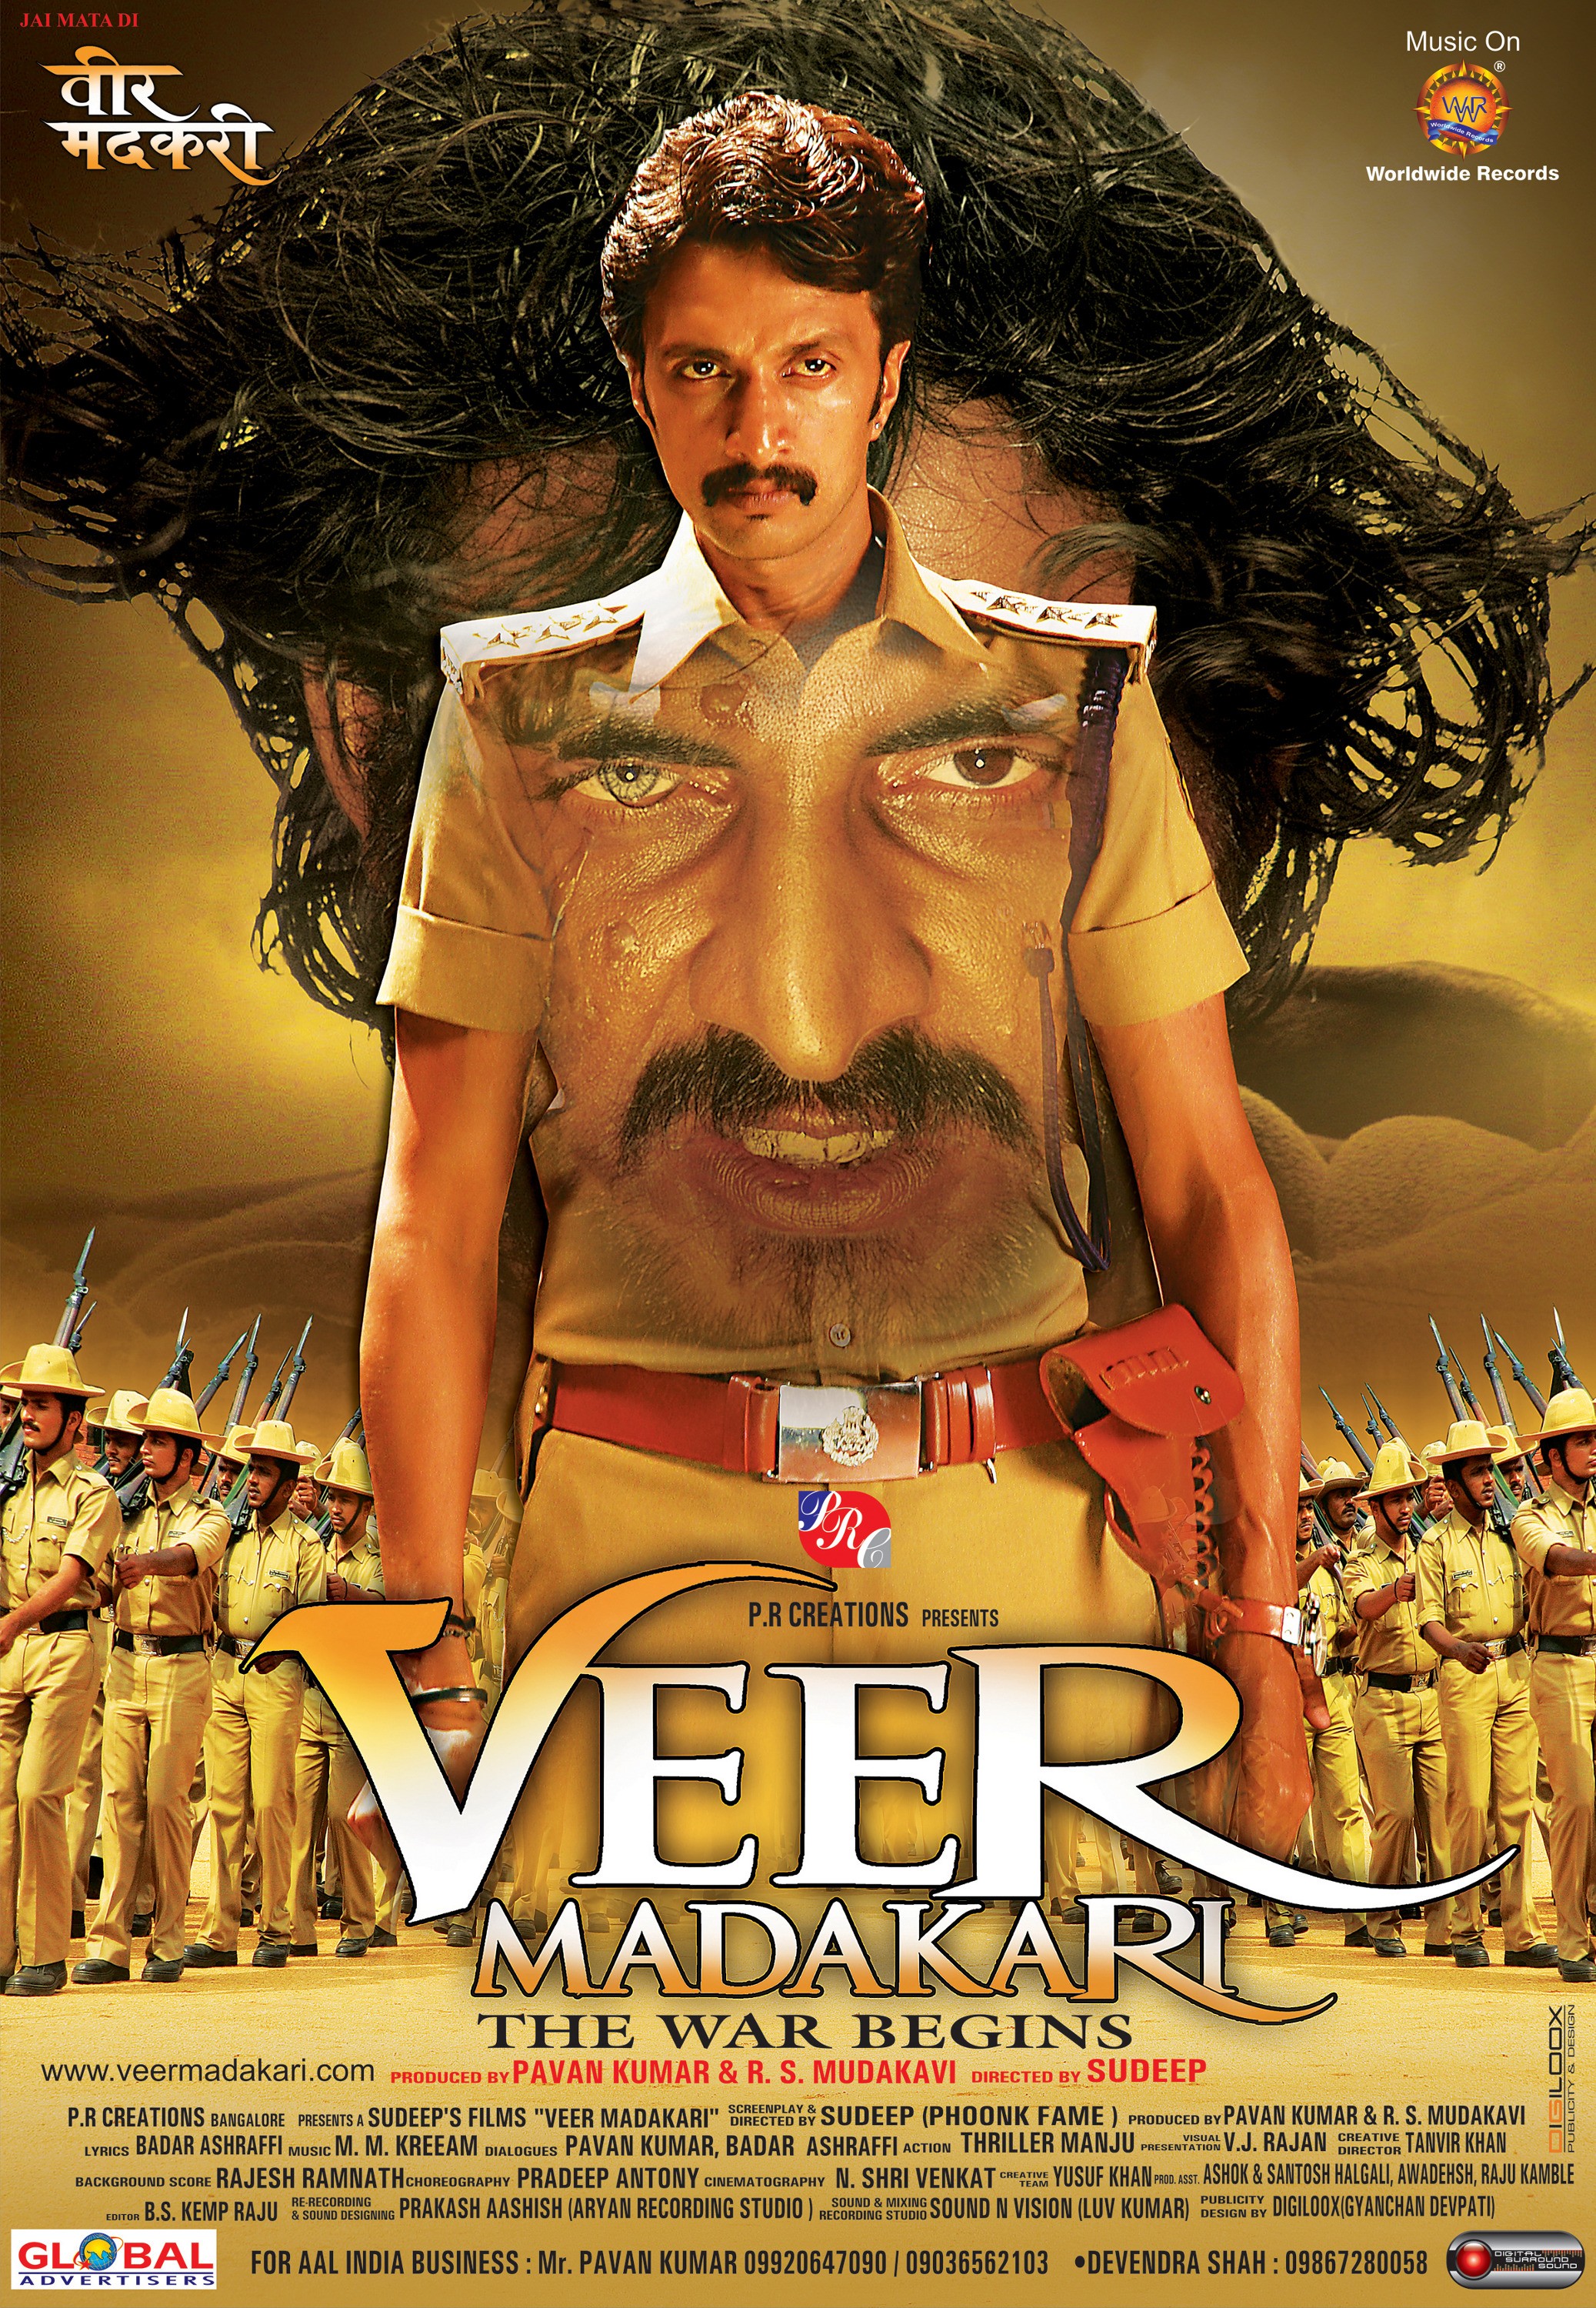 Mega Sized Movie Poster Image for Veera Madakari 